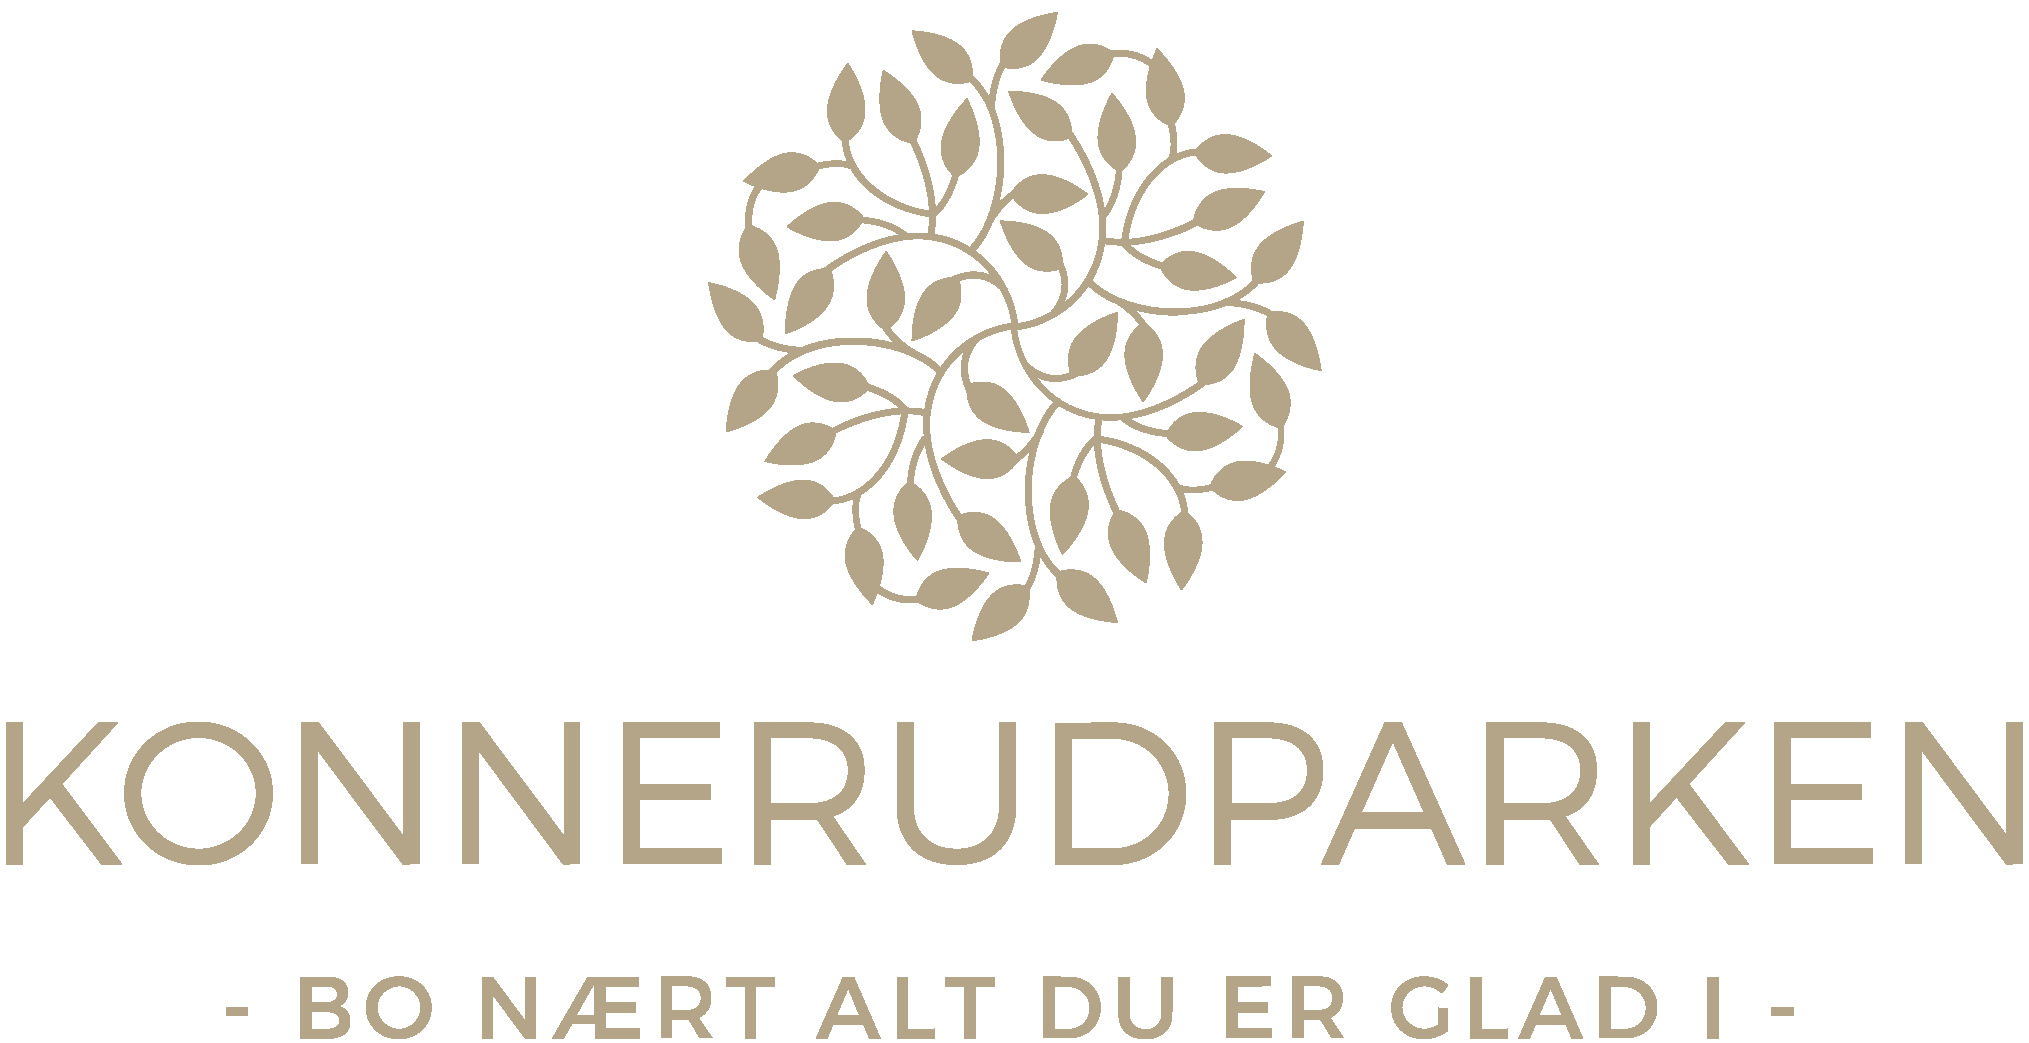 Logoen for Konnerudparken.